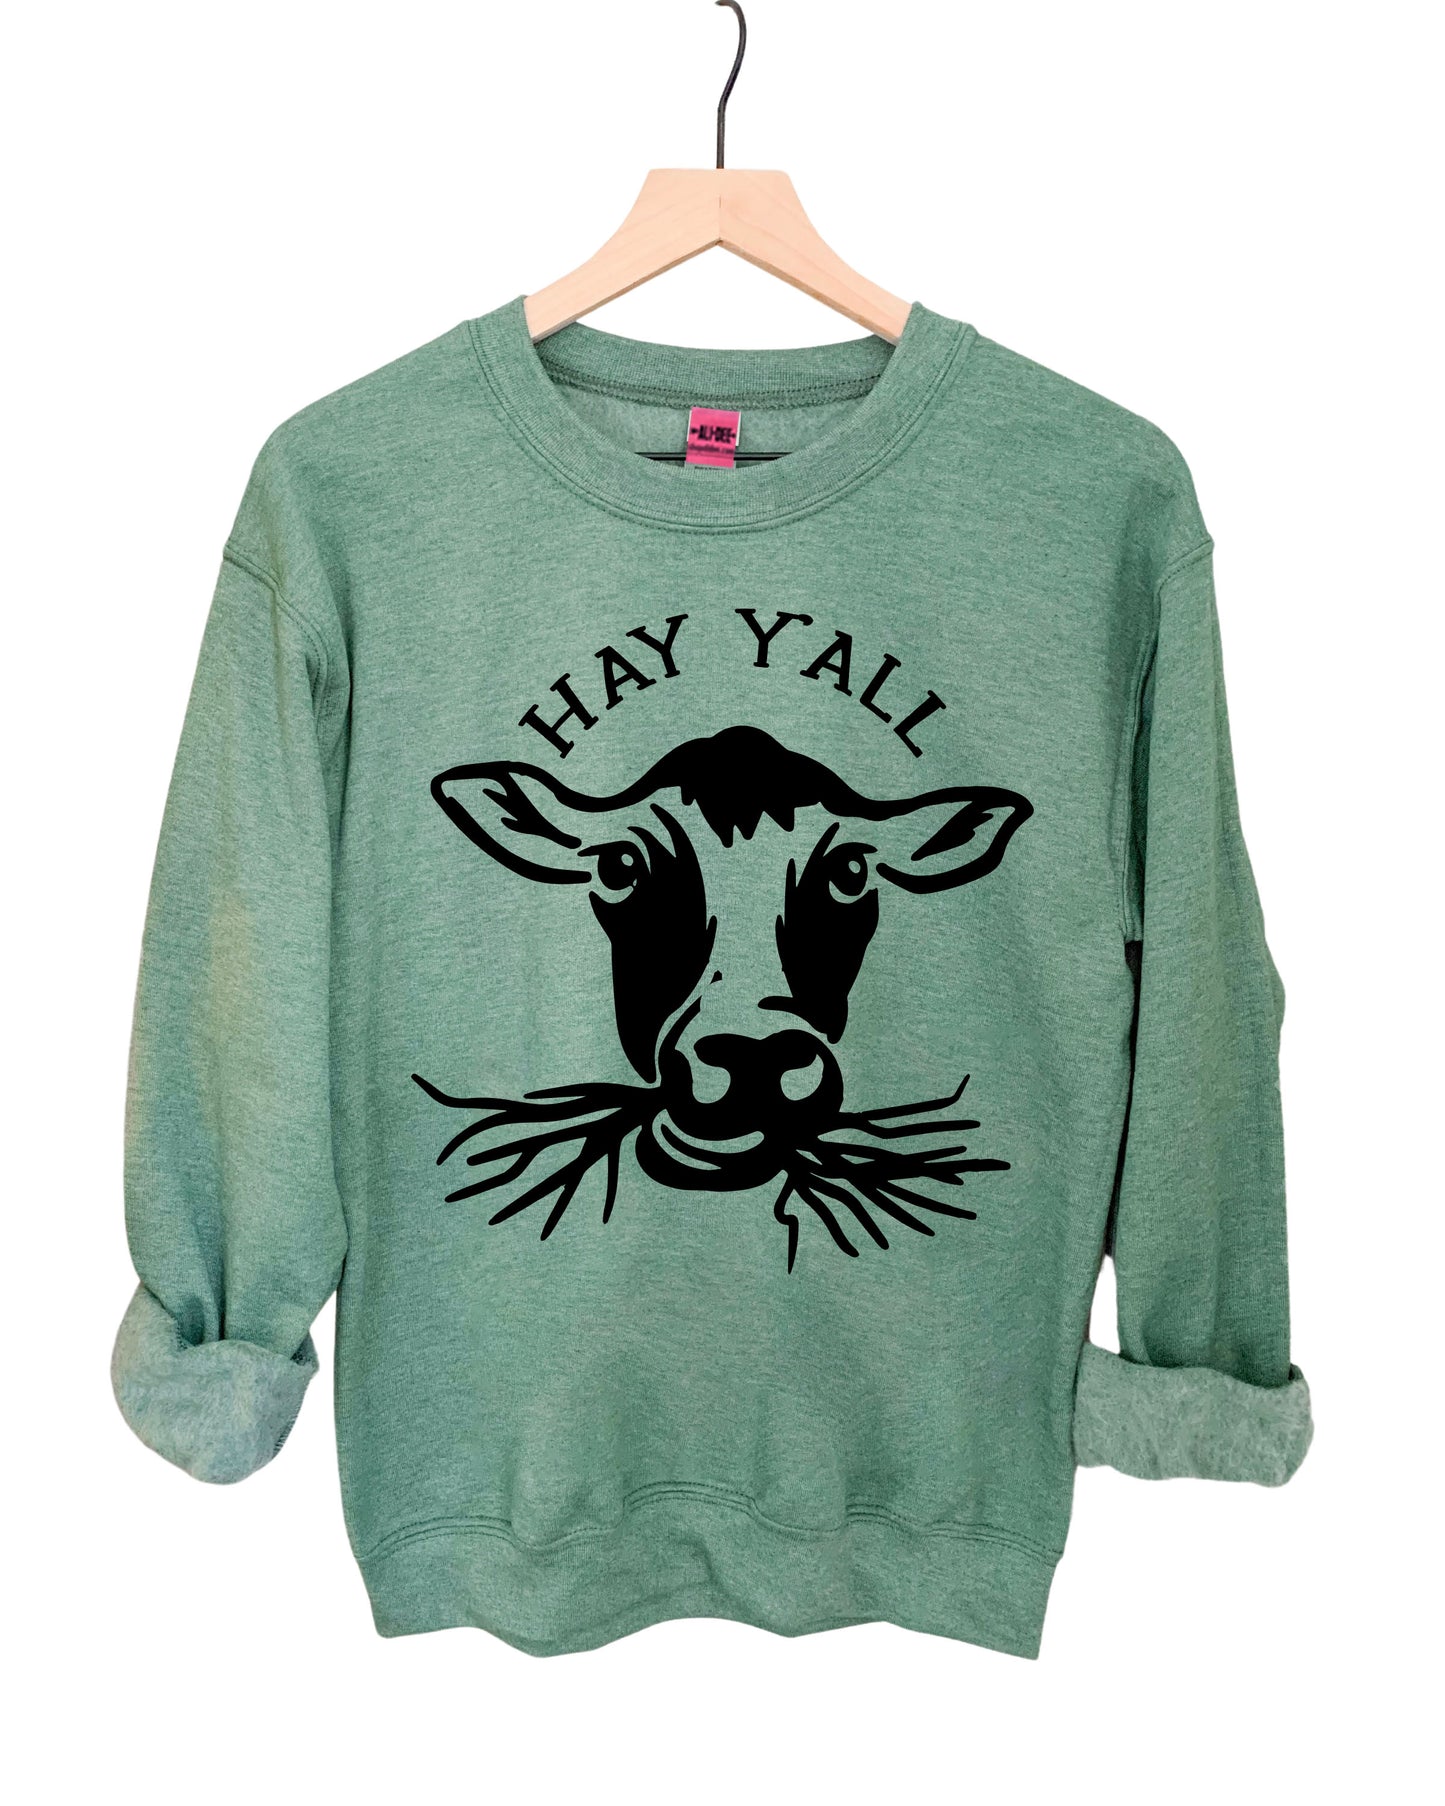 Hay Y'all Graphic Sweatshirt - Heather Green